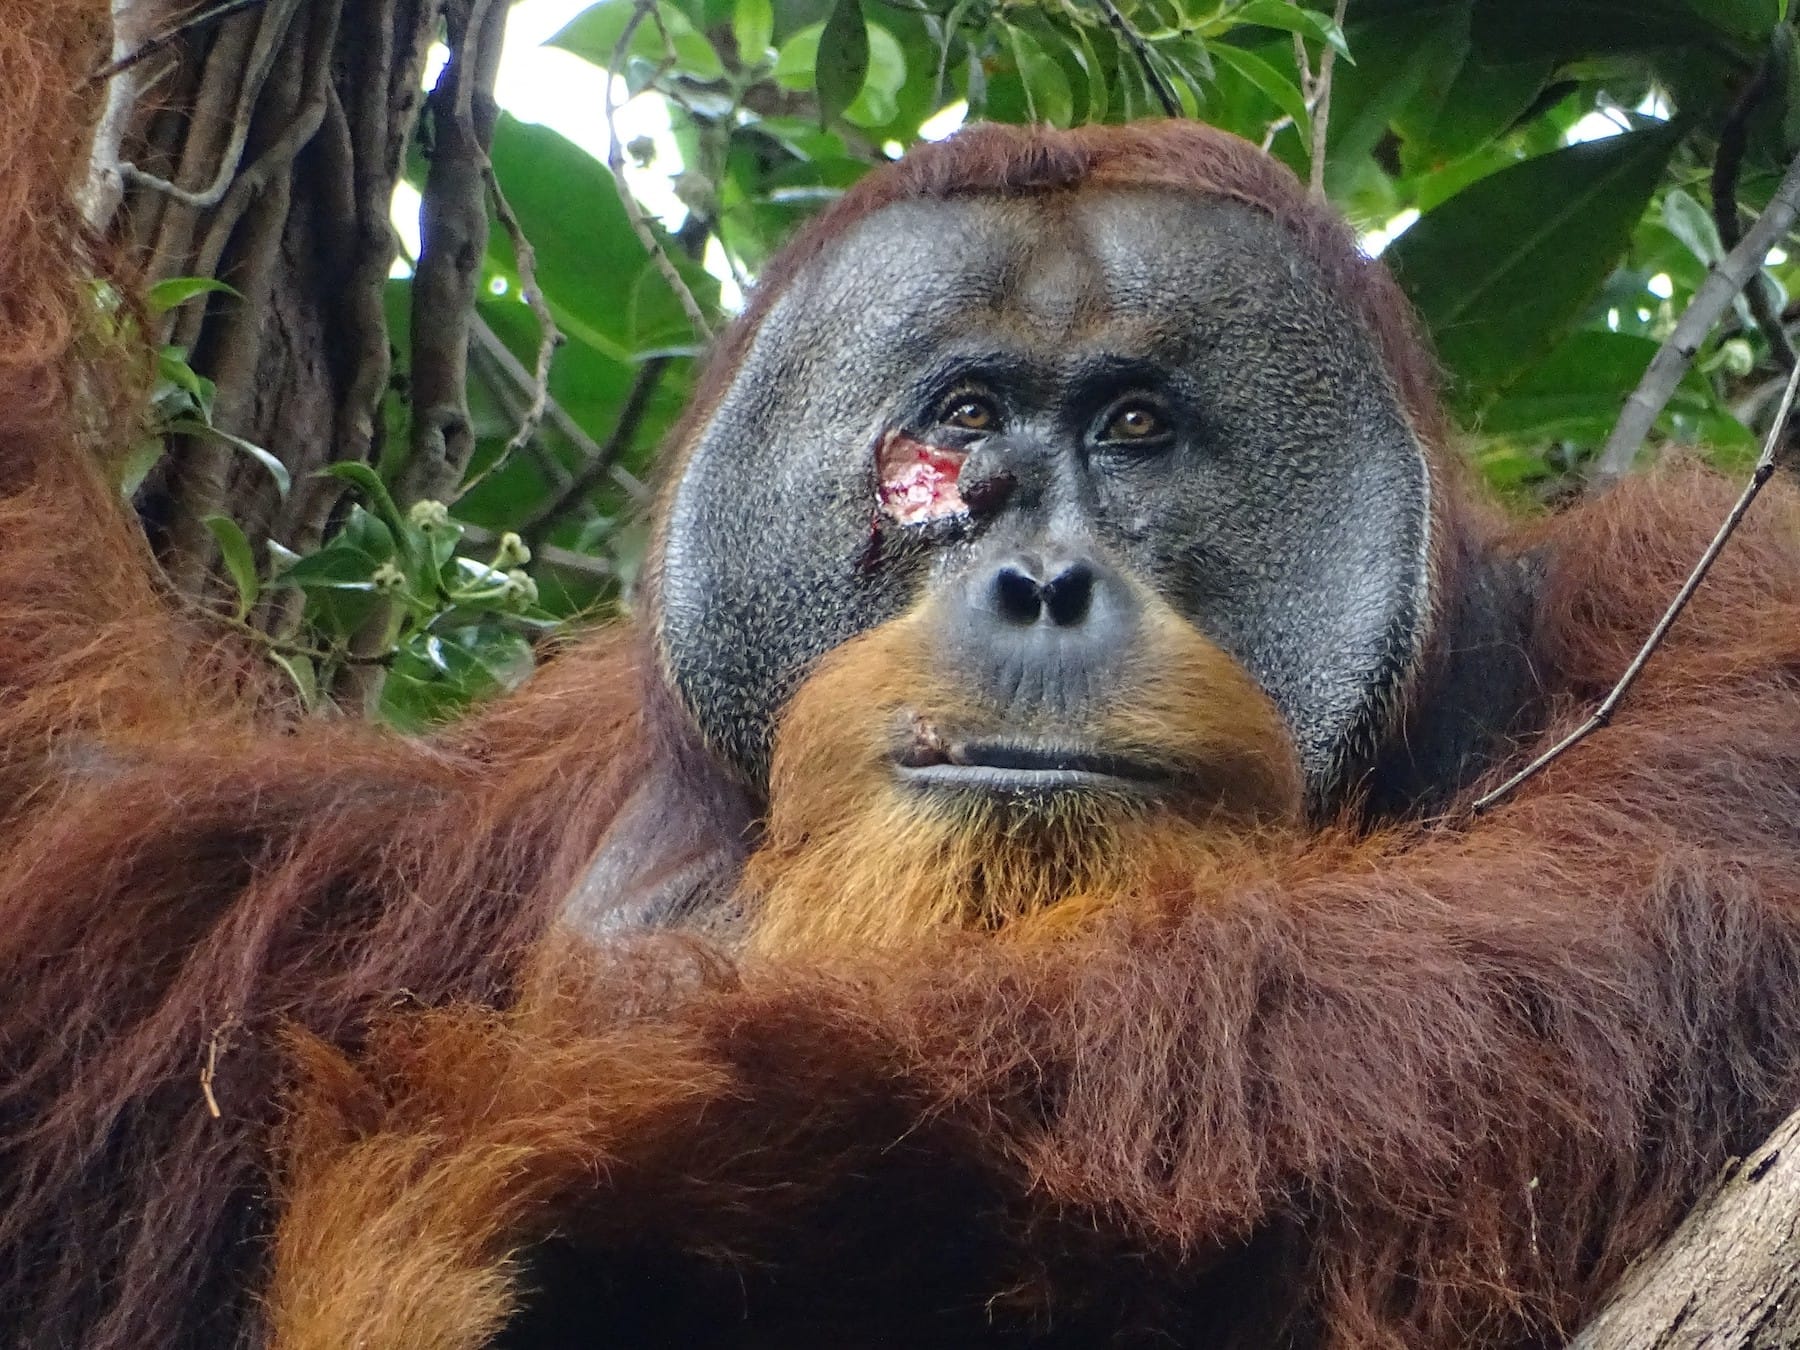 indonesia orangutan use medicinal plant to heal wounds